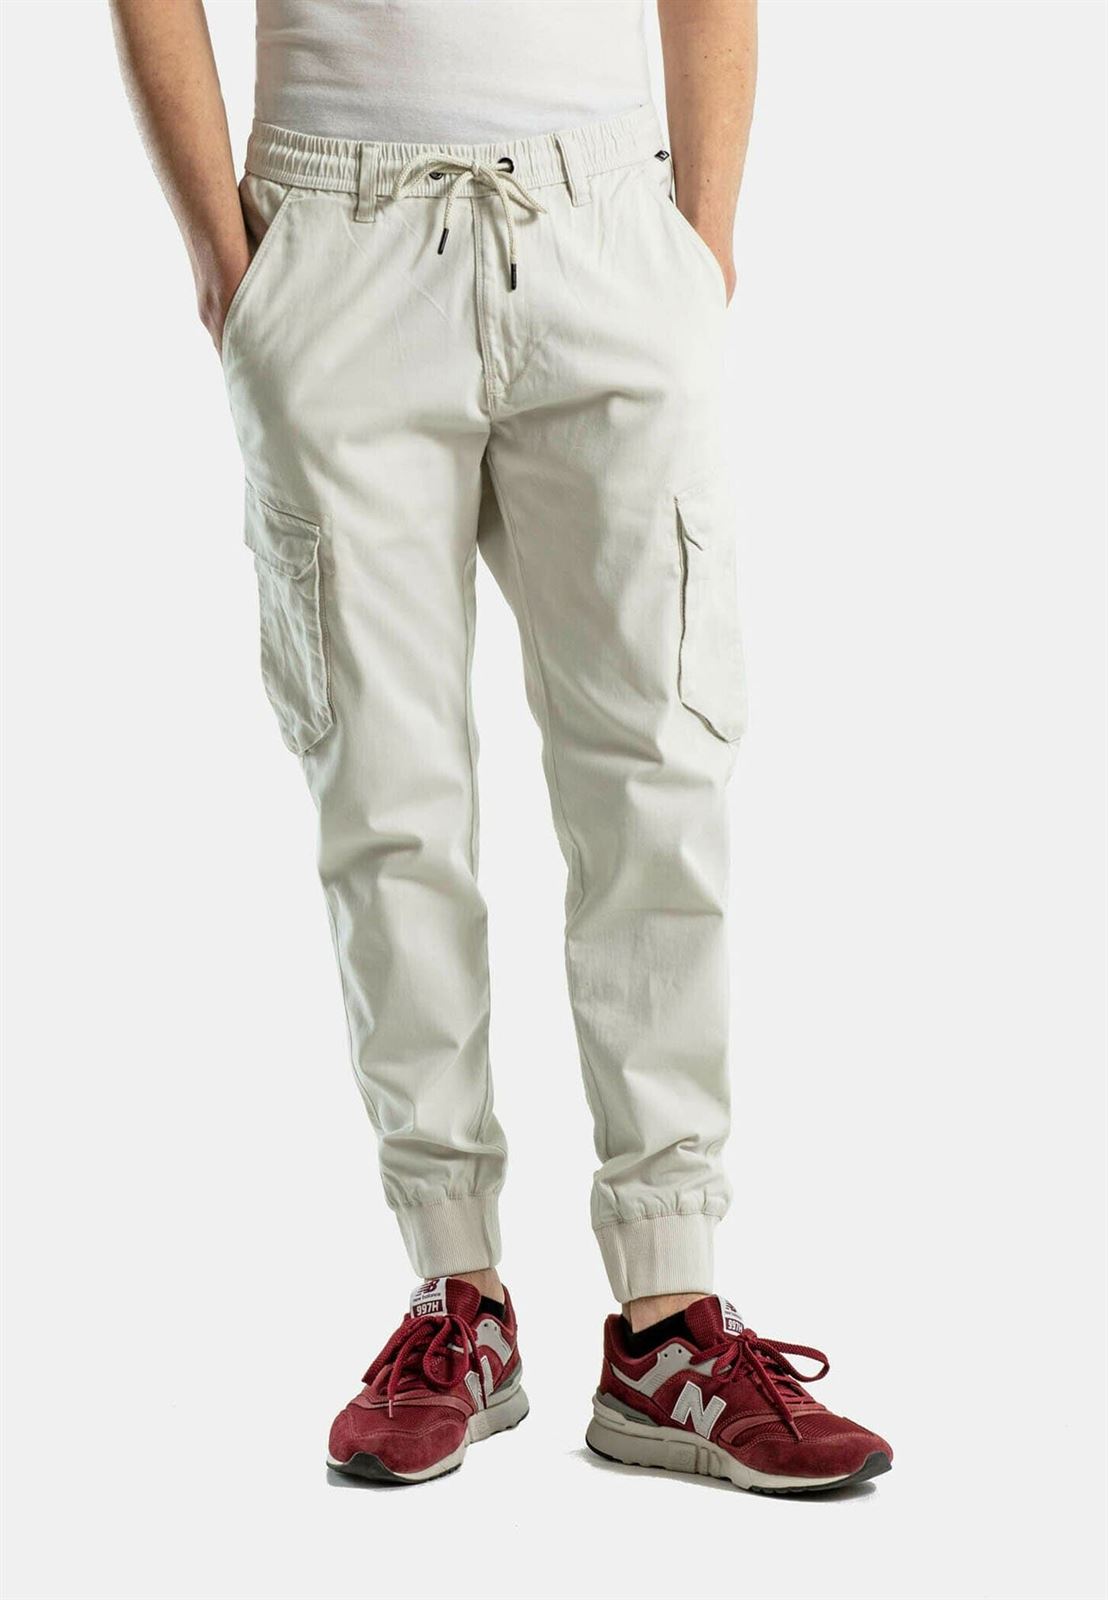 Pantalon Reell Reflex RIB CARGO OFF WHITE - Imagen 1